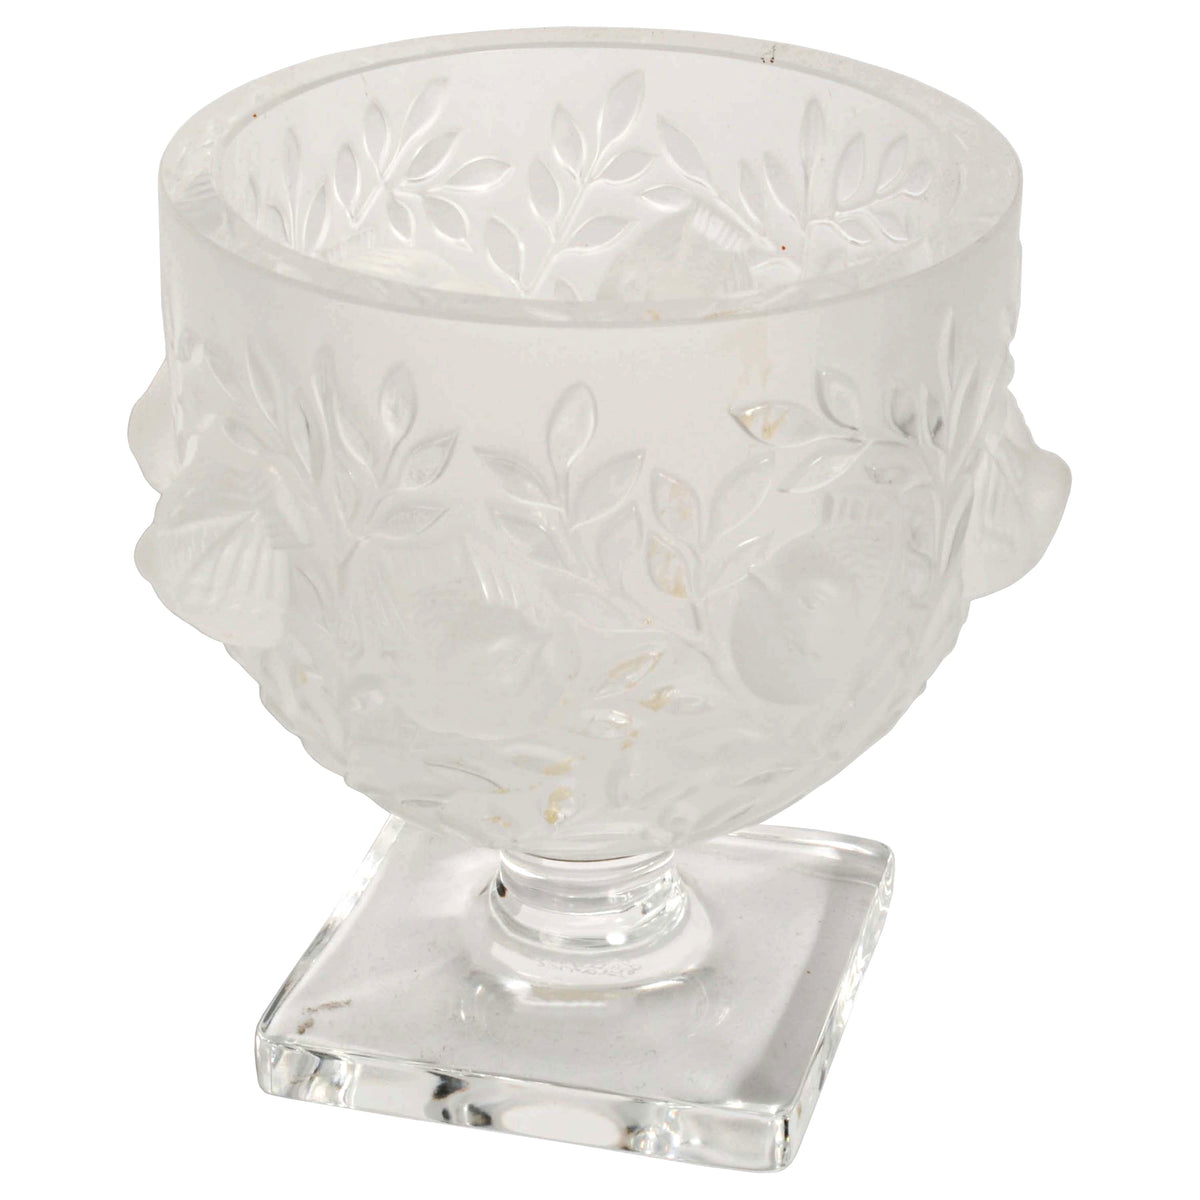 Vintage French Art Deco Style Lalique Elisabeth Crystal Glass Coupe Vase, Signed